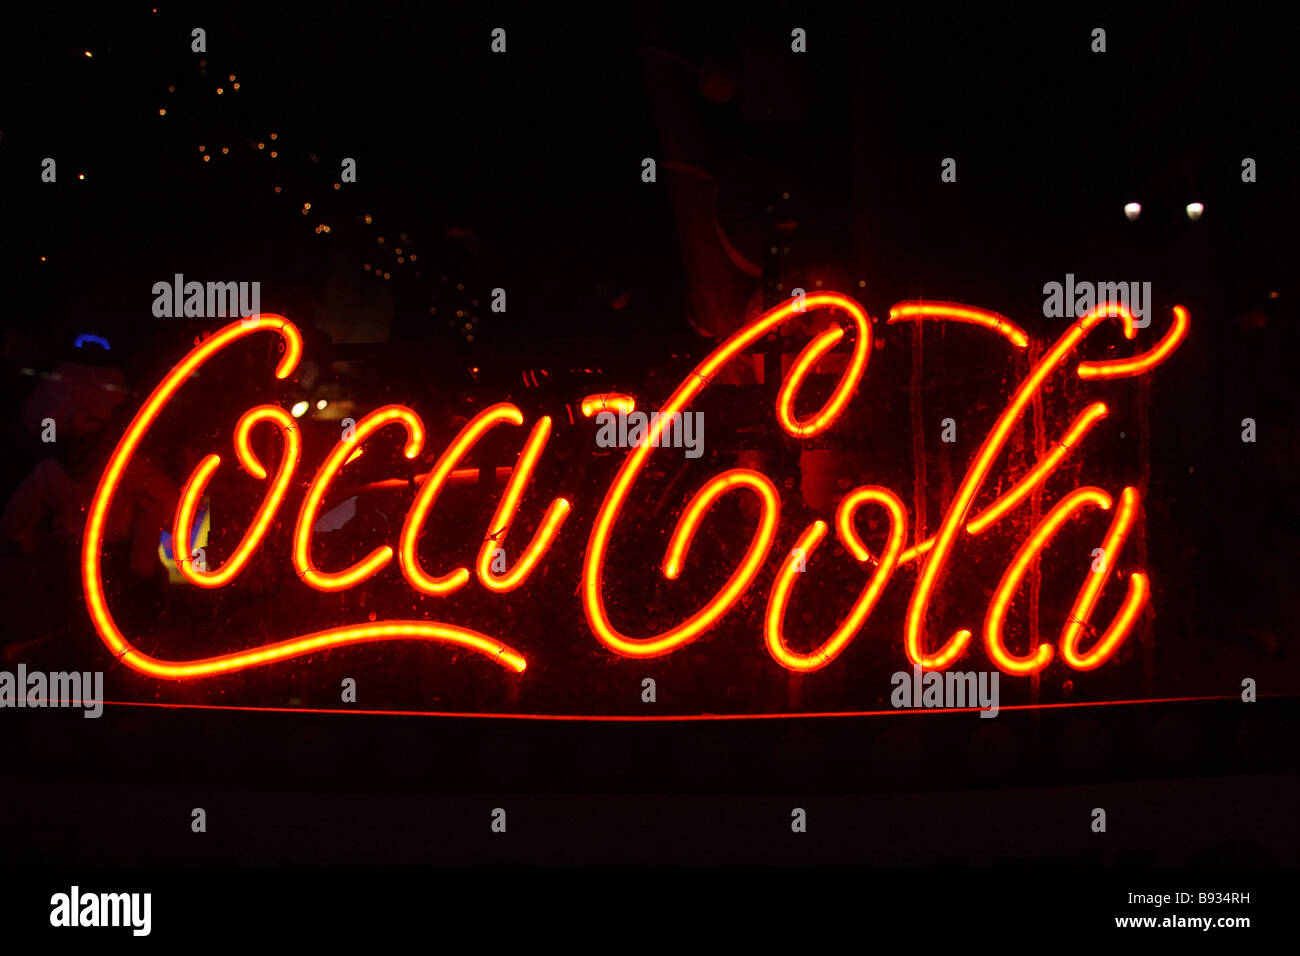 Coca Cola Neon Sign at night Photo Stock - Alamy